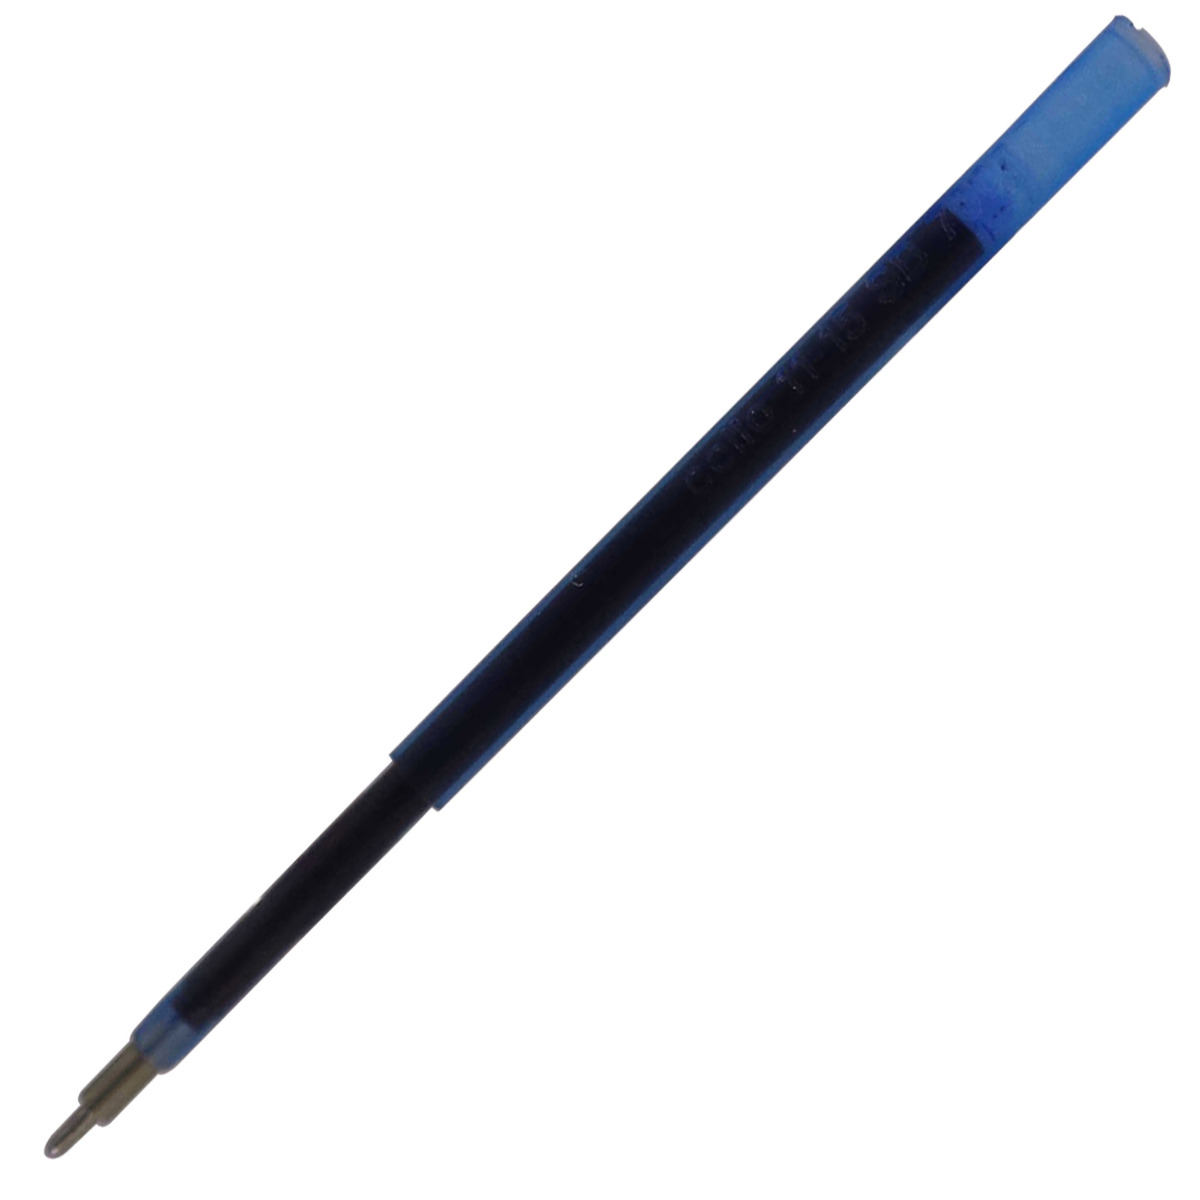 Cello LP 3000 Blue color with Inox Tip ball pen Refill Model: 13482